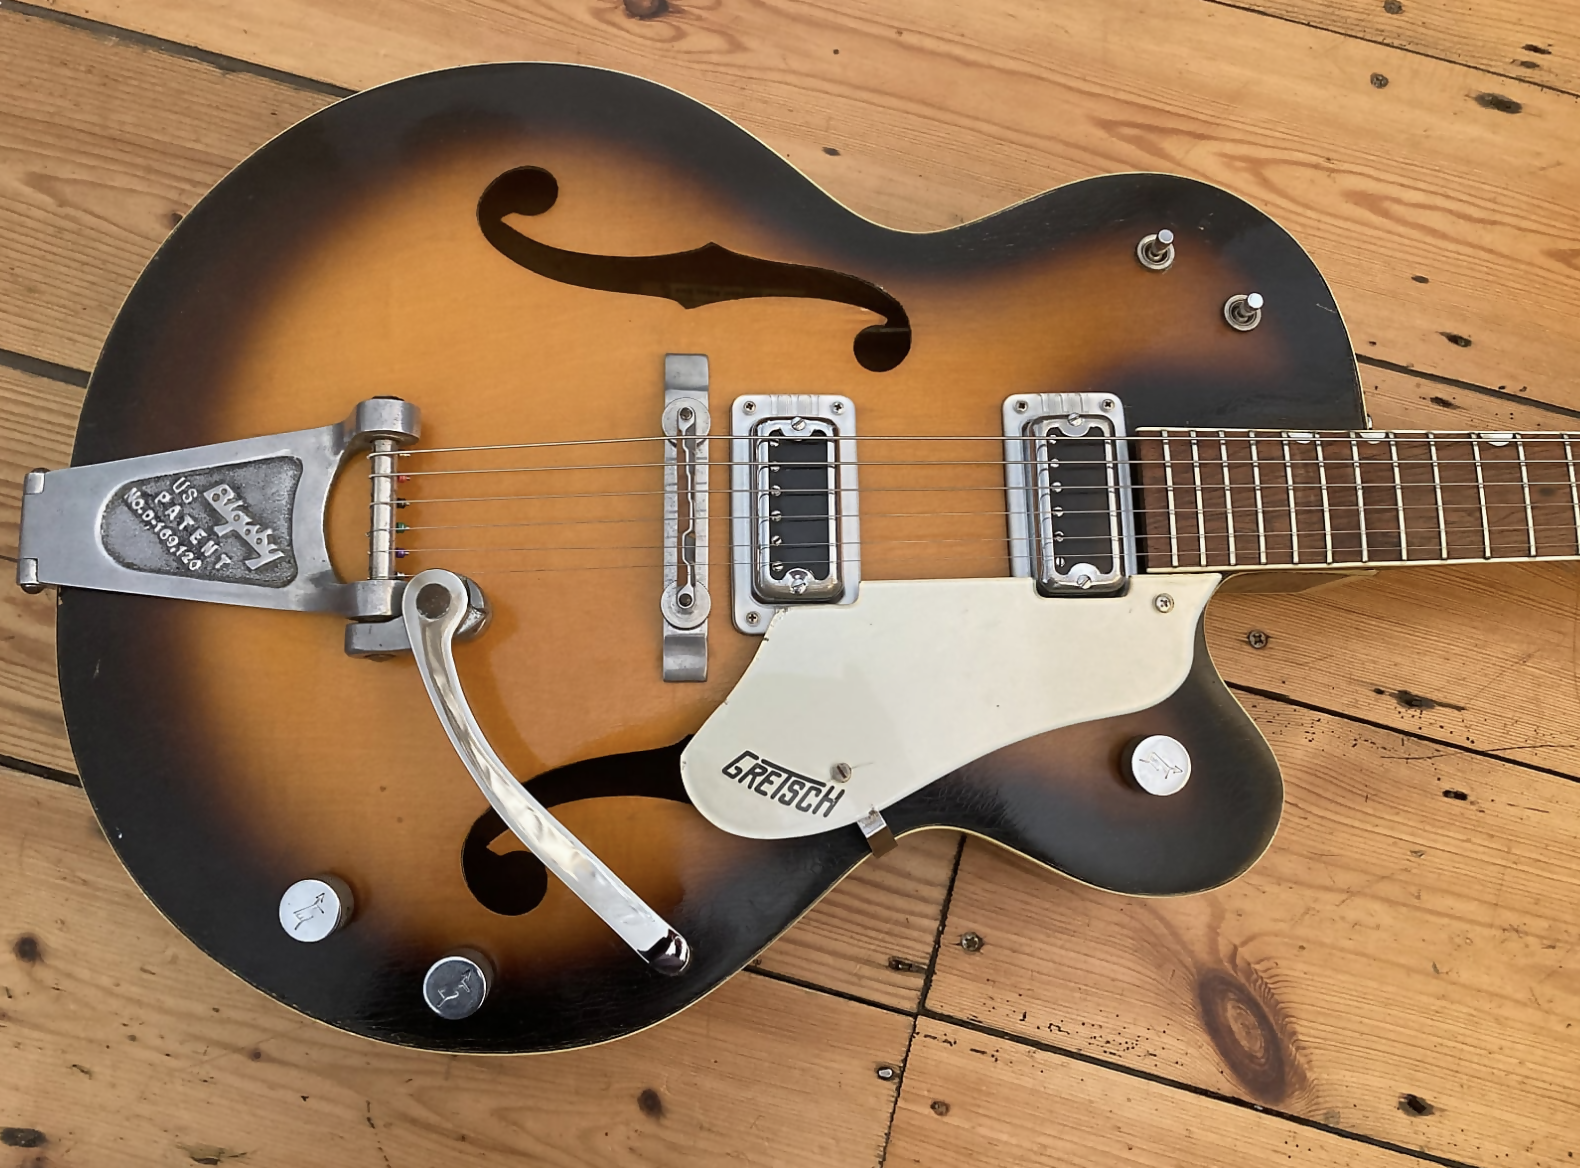 1963 Gretsch Model 6117T Anniversary Electric Guitar - Made in USA - Vintage - Roadworn